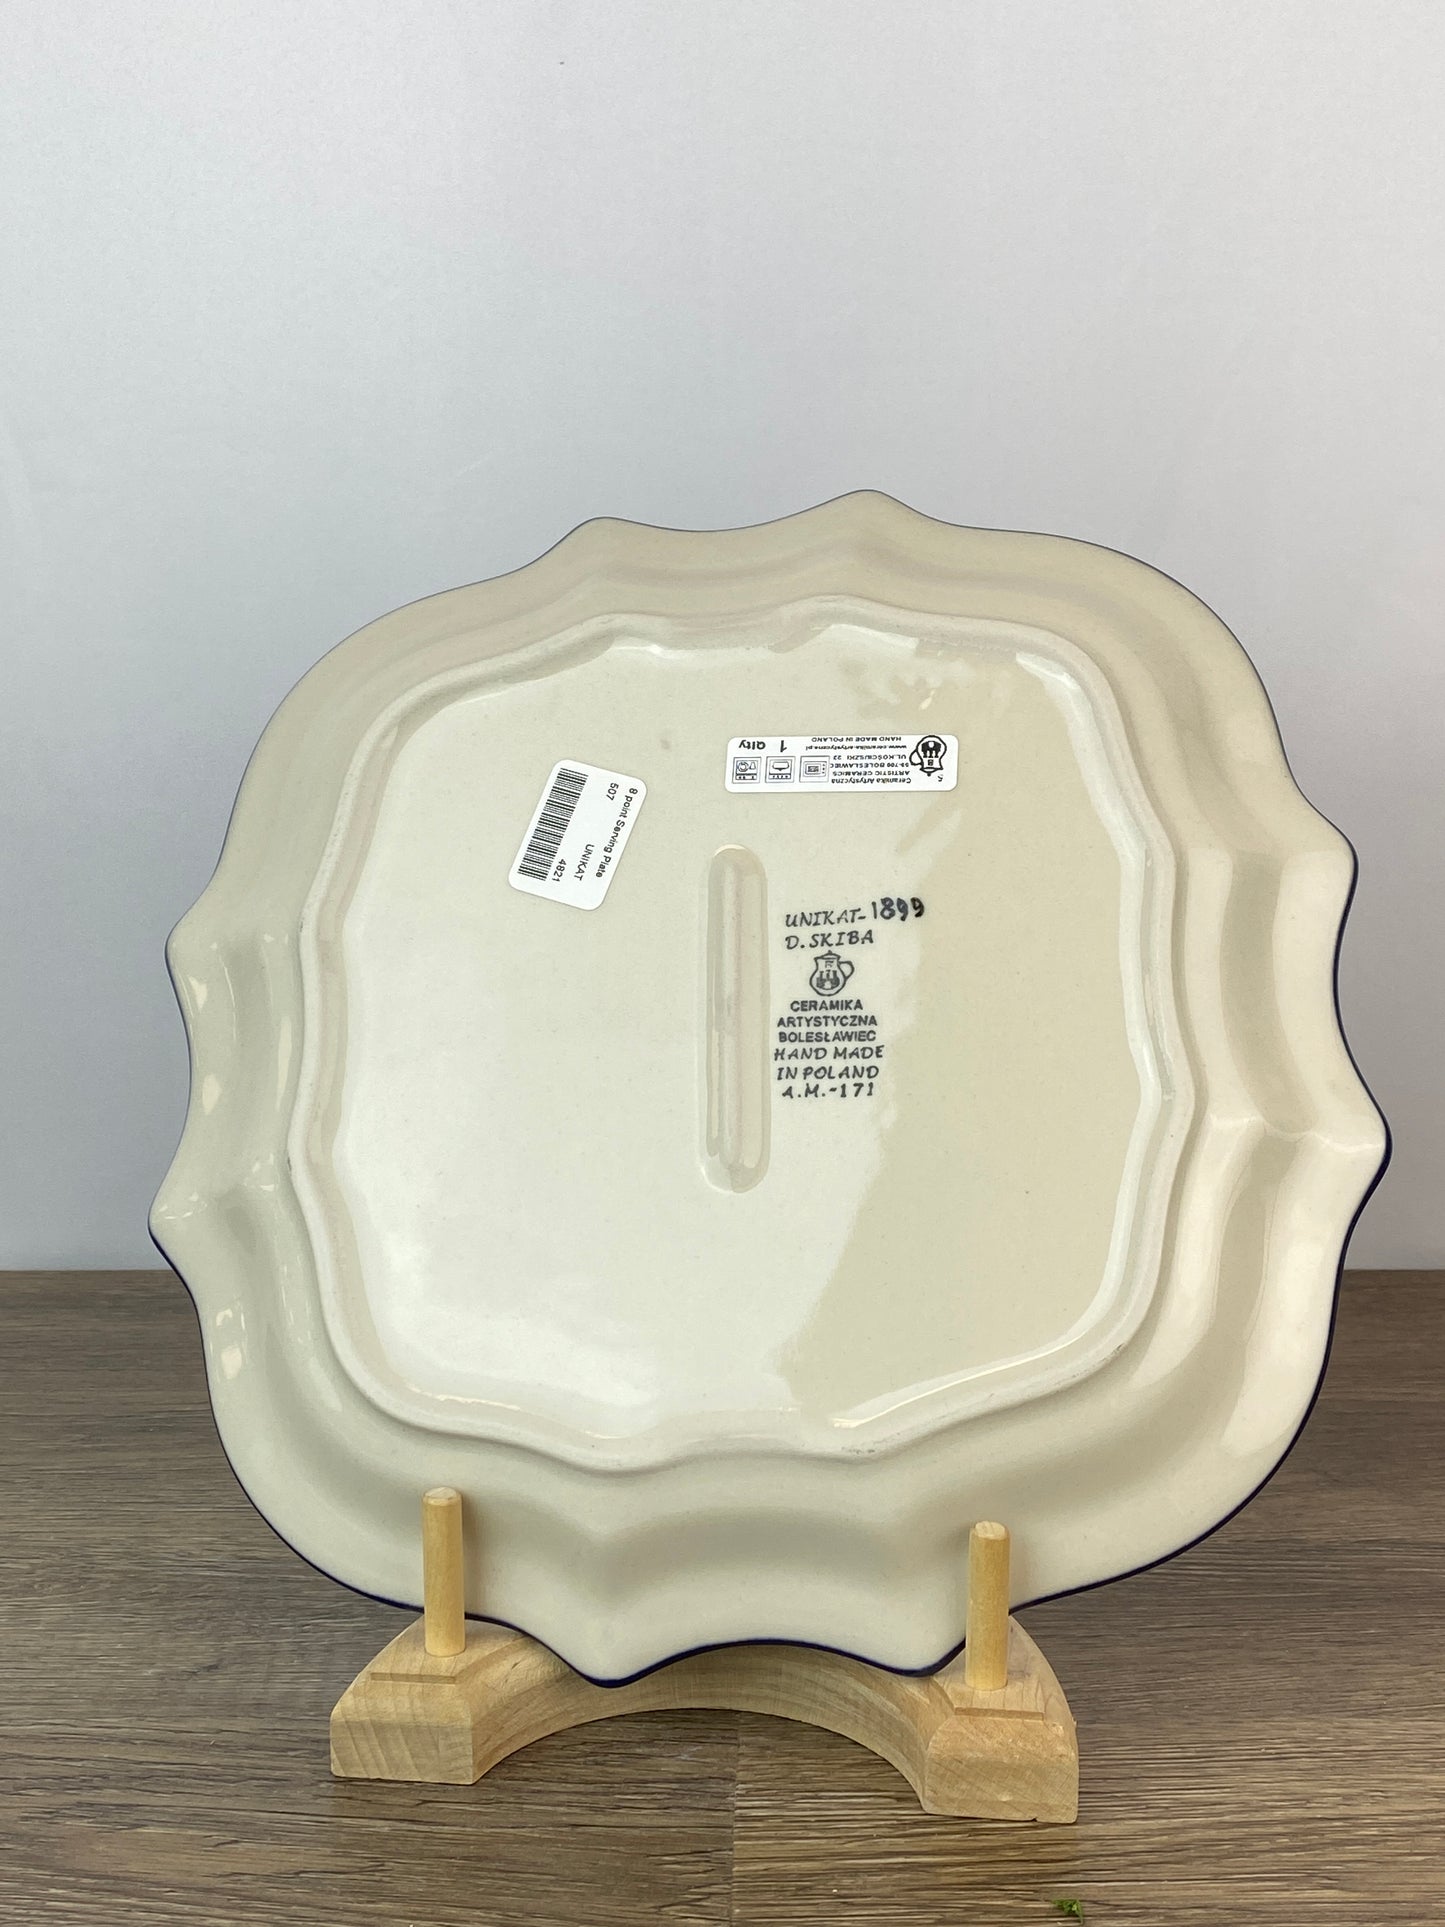 SALE 8 Pointed Unikat Platter/ Plate - Shape 507 - Pattern U1899